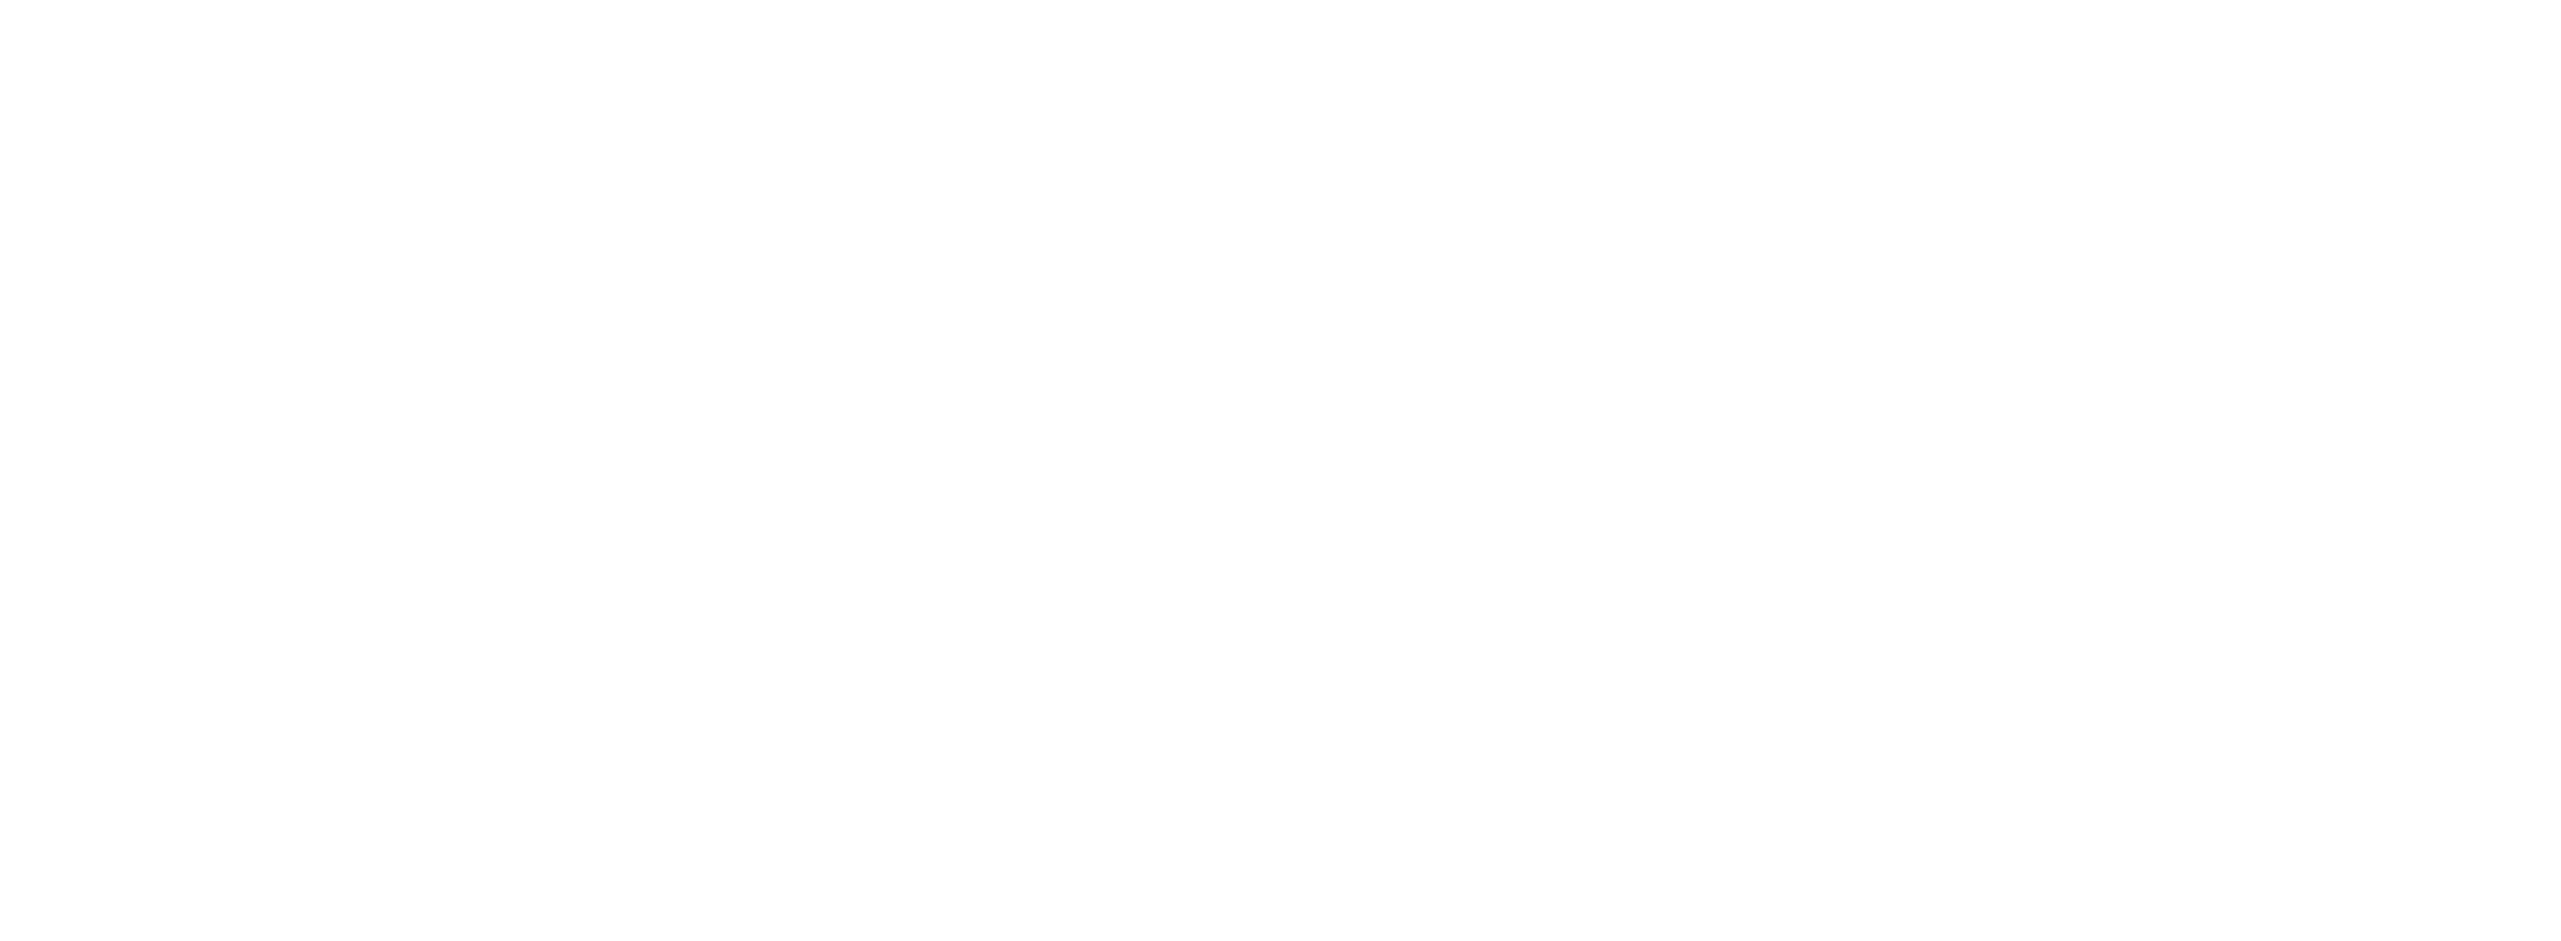 Forensic Network